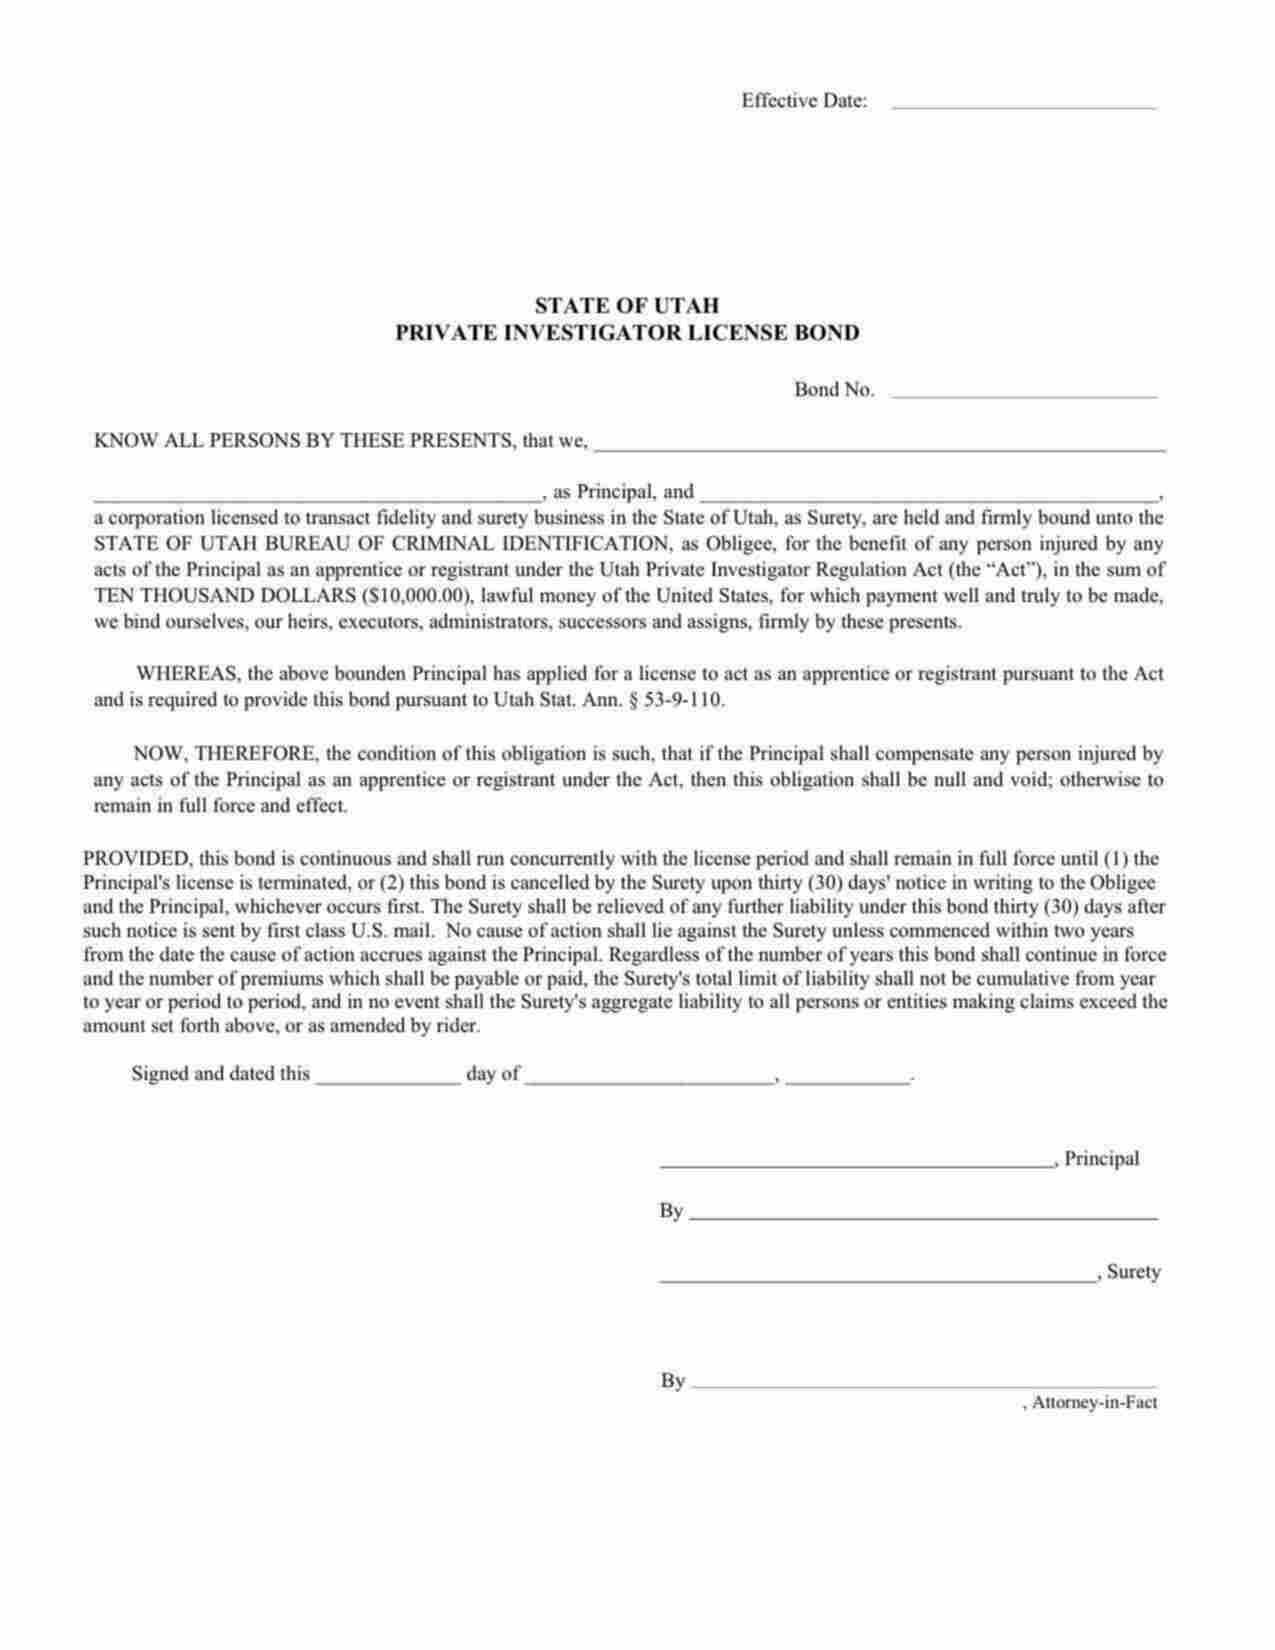 Utah Private Investigator License Bond Form